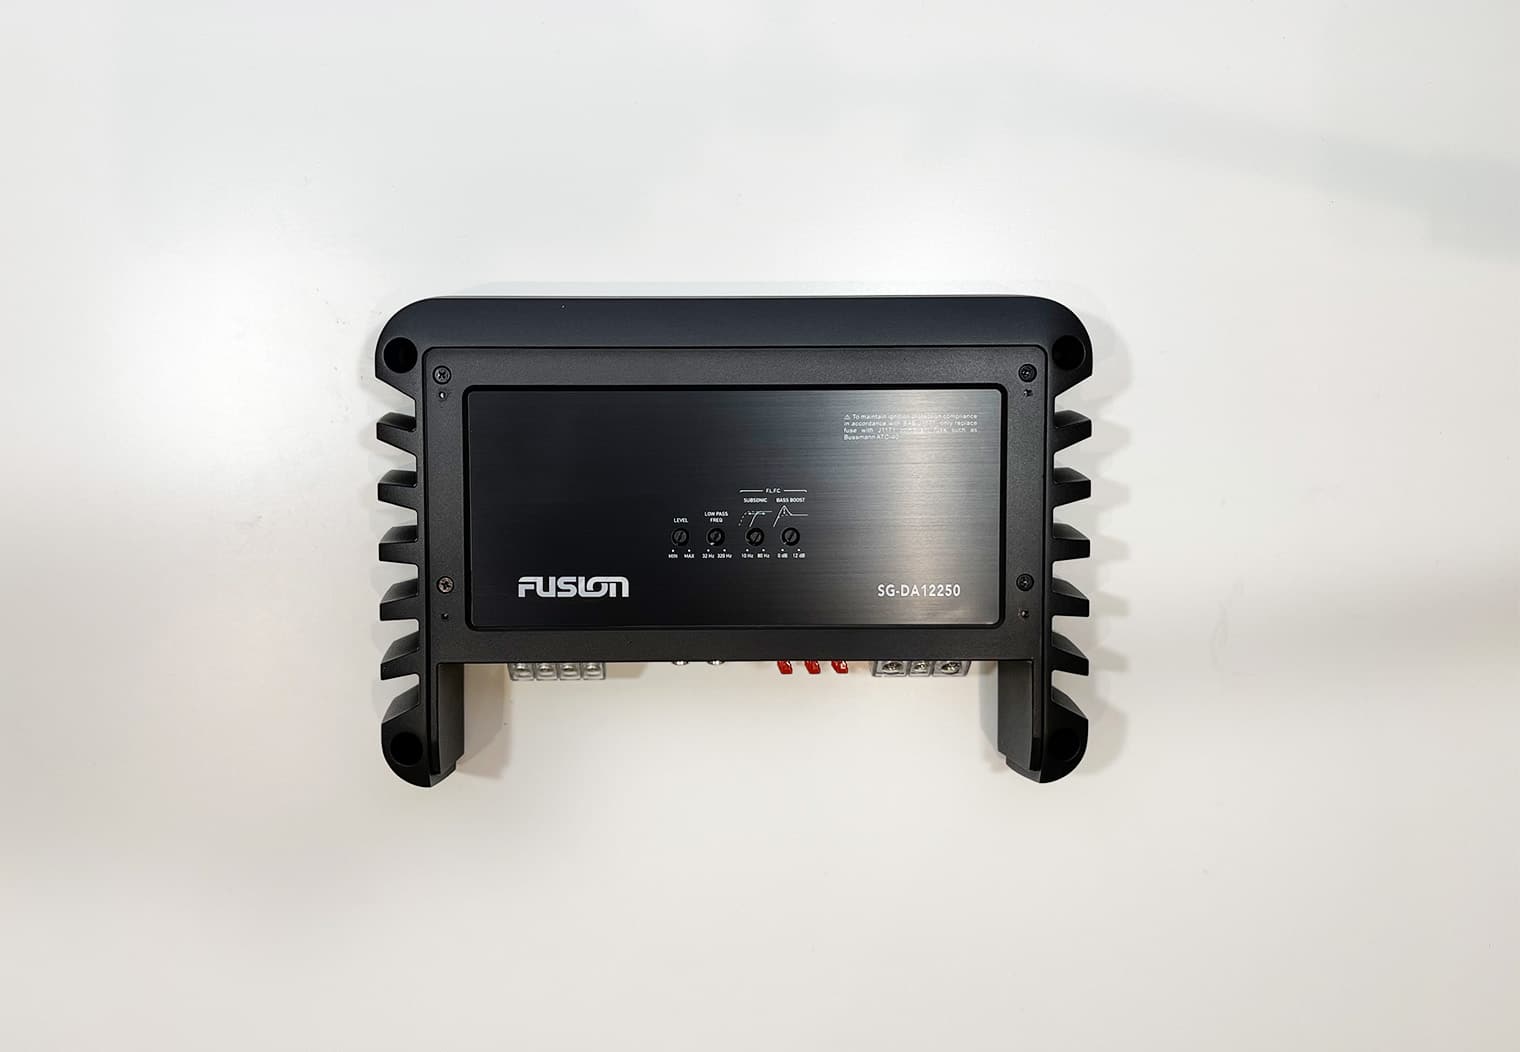 Fusion Signature Series mono amplifier configuration panel